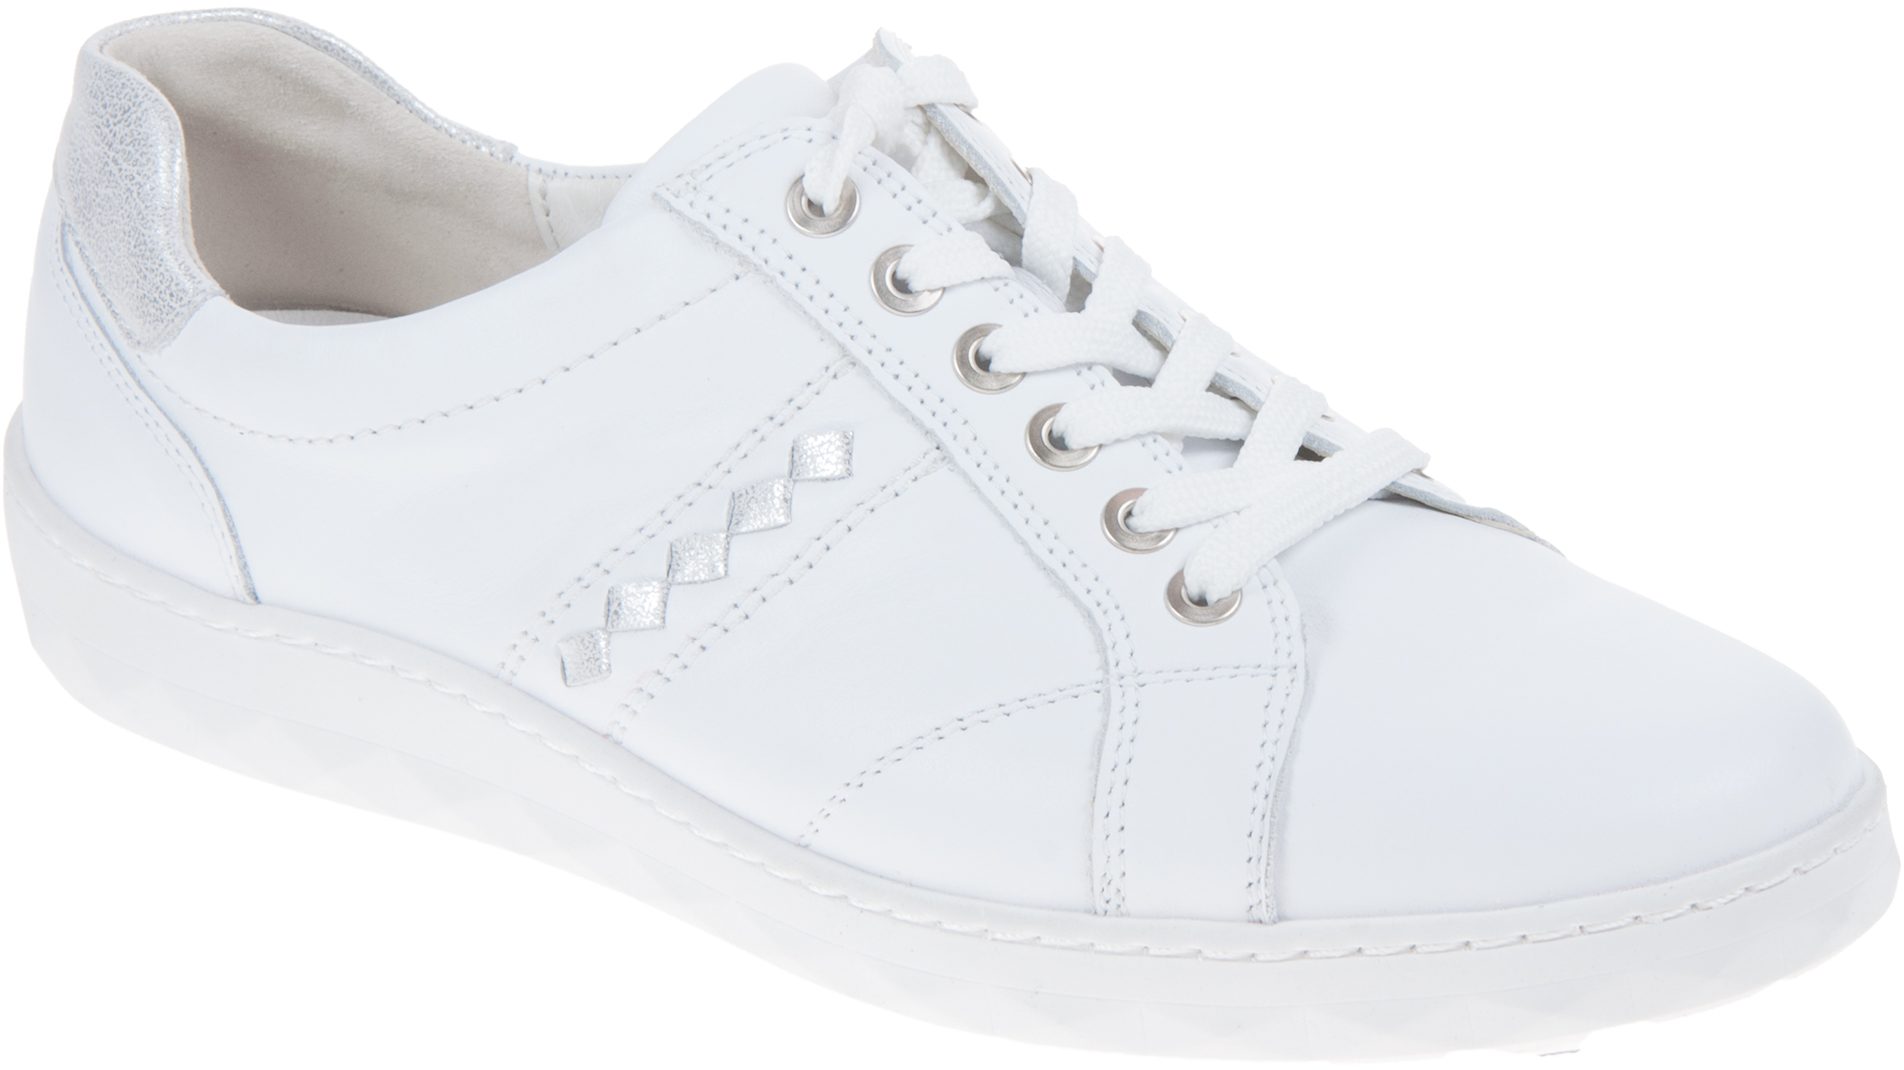 Waldlaufer Herne White / Silver 921004 201 150 - Everyday Shoes ...